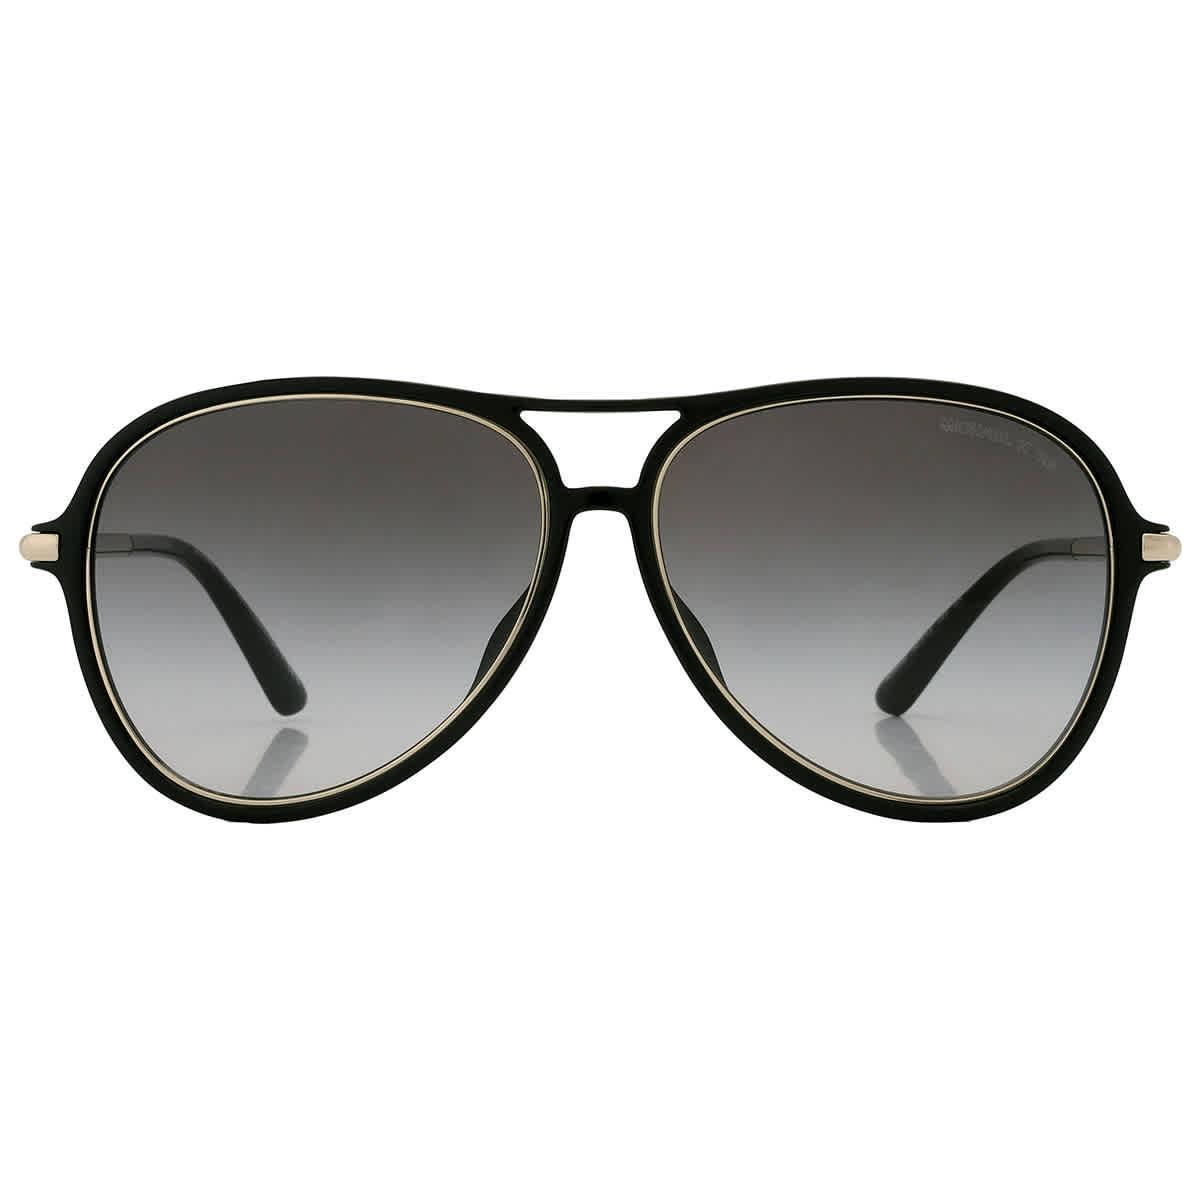 Michael Kors Breckenridge 58mm Gradient Aviator Sunglasses Product Image